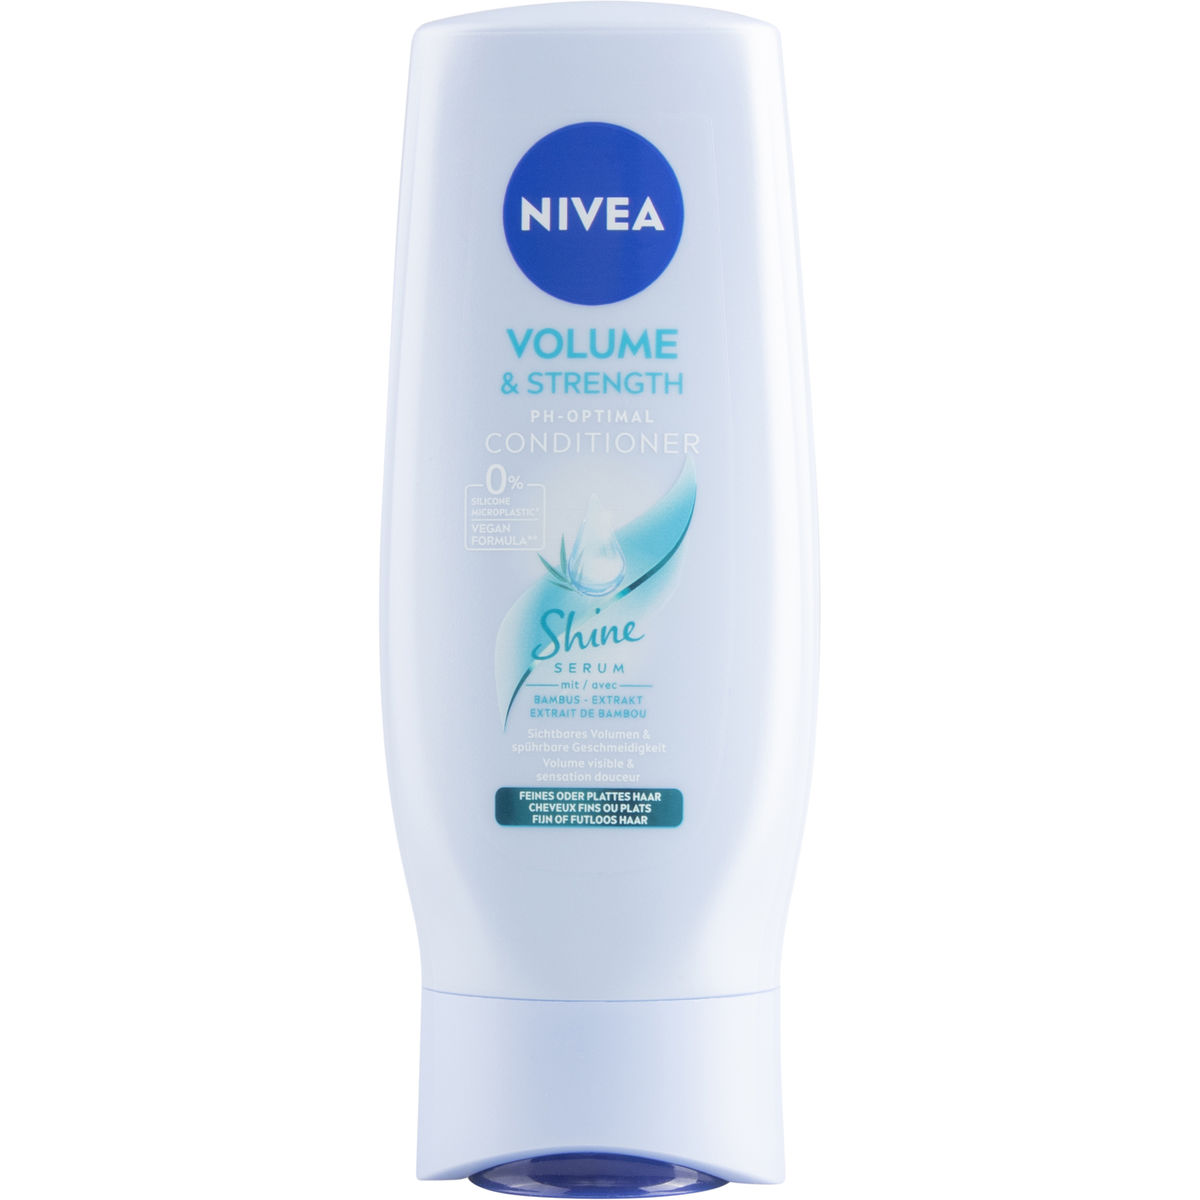 Nivea Volume & Strength PH-Optimal Conditioner Shine Serum 200 ml